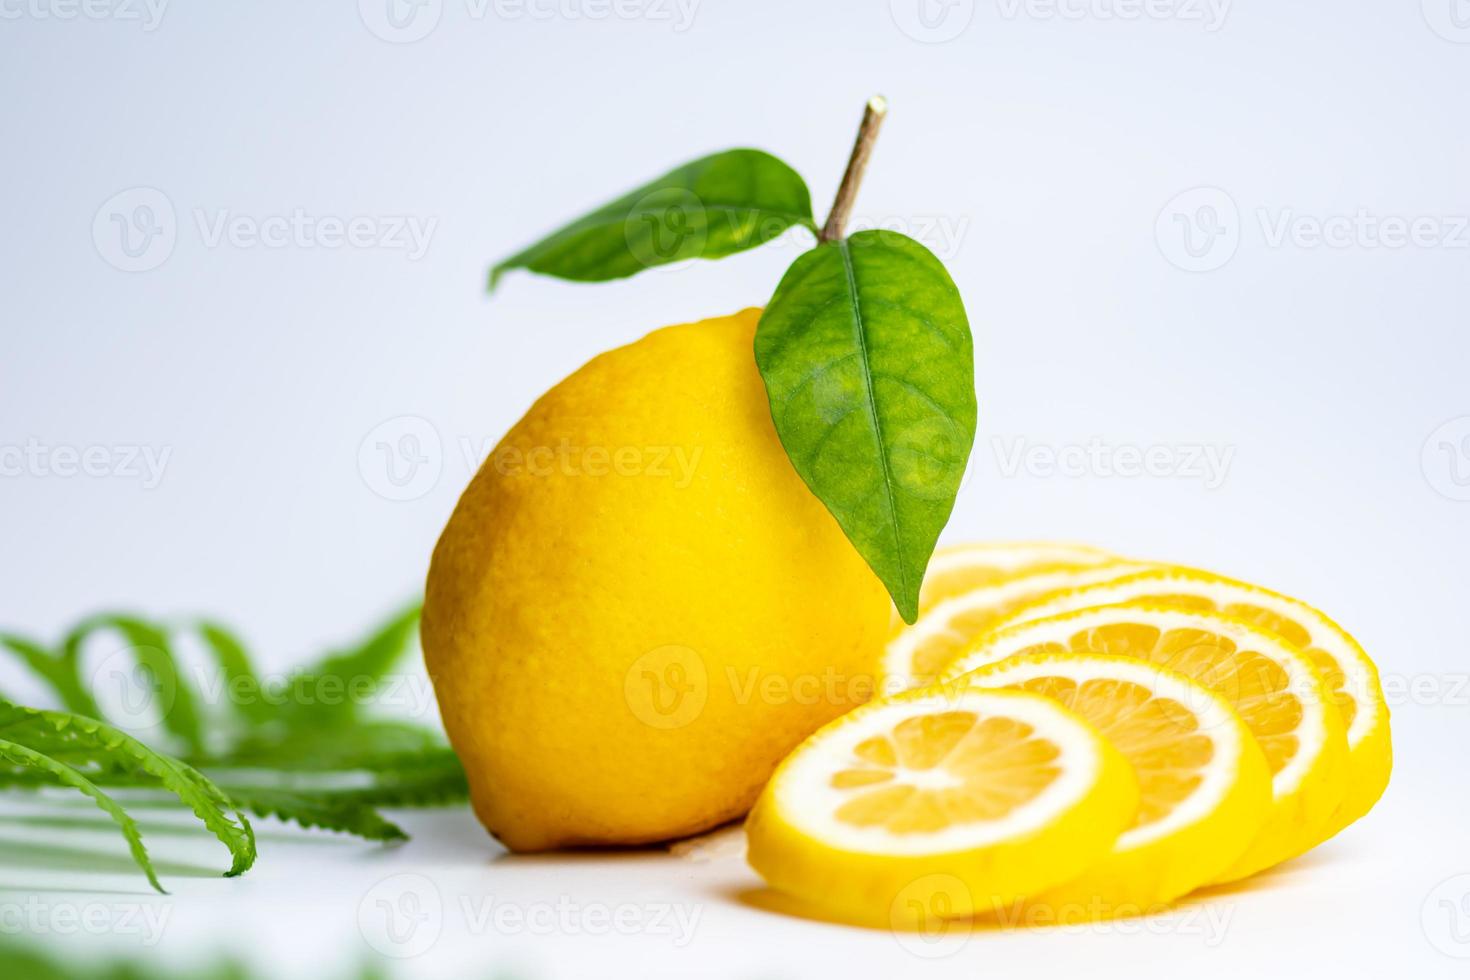 The Lemon and lemon slice  and bottles on the white background photo